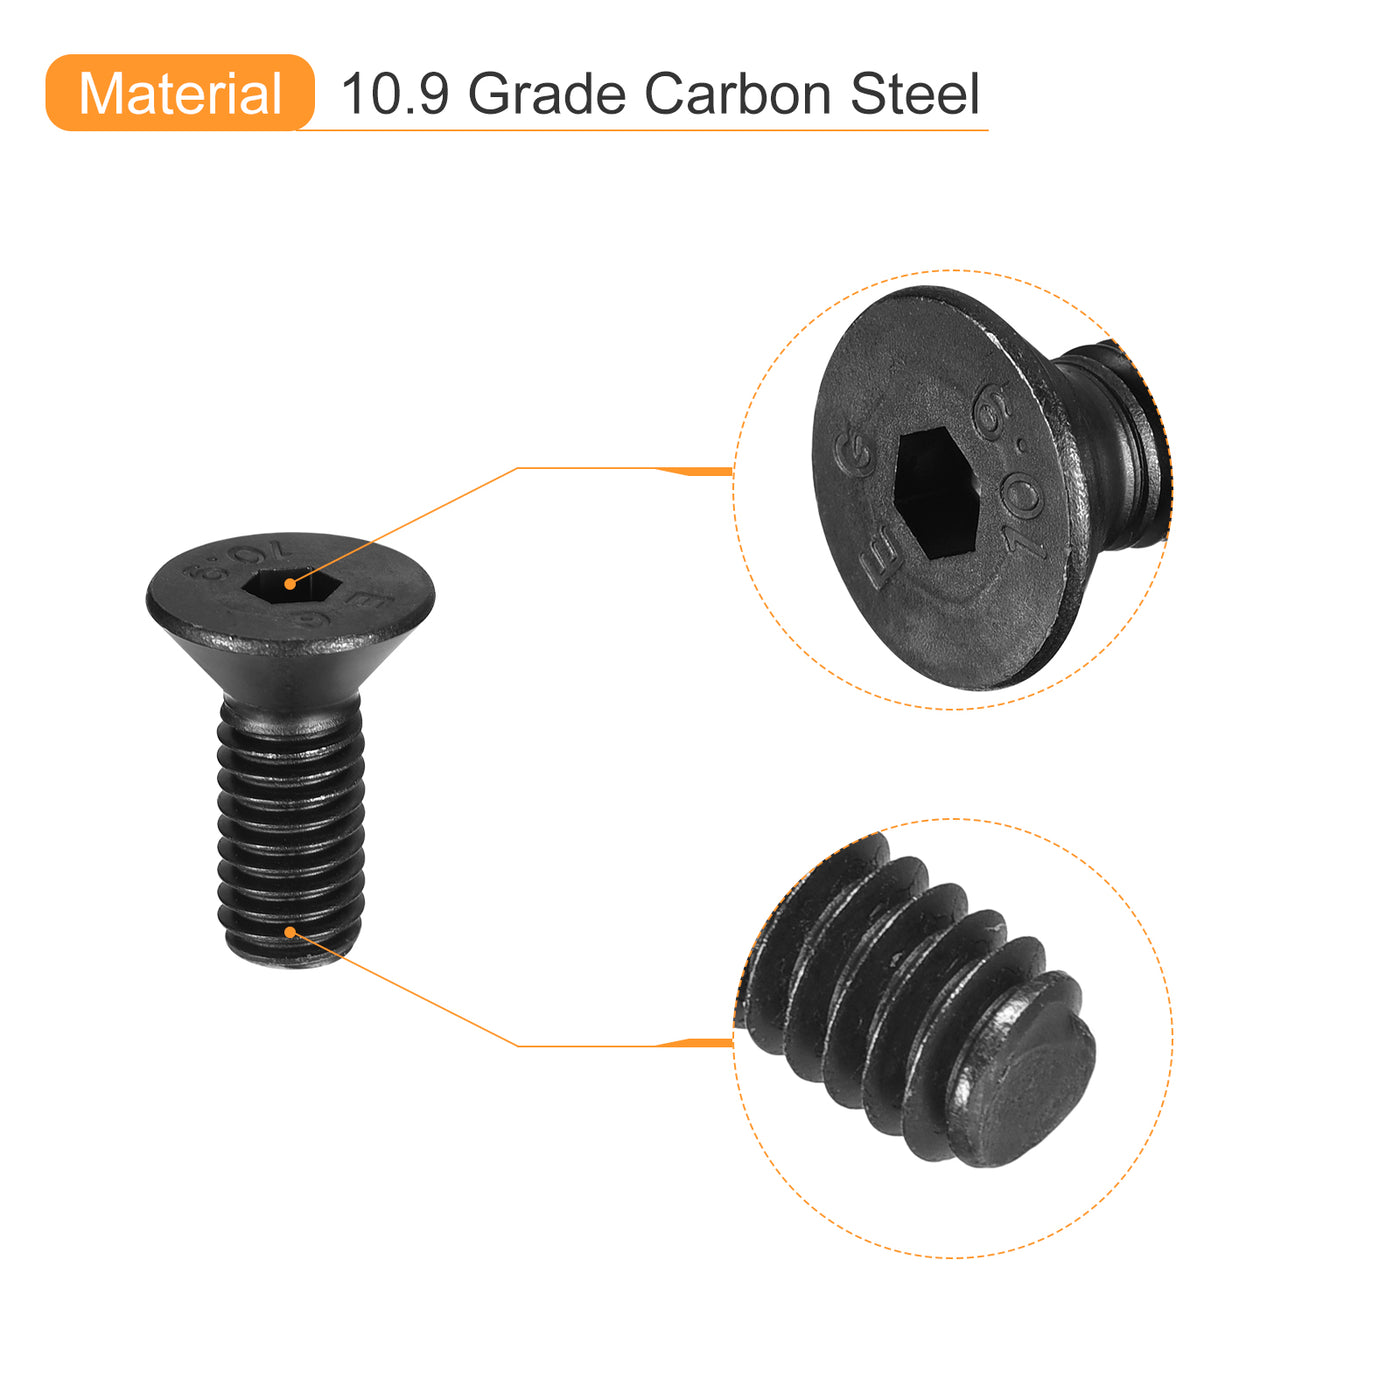 uxcell Uxcell 3/8-16x1" Flat Head Socket Cap Screws, 10.9 Grade Carbon Steel, 20PCS